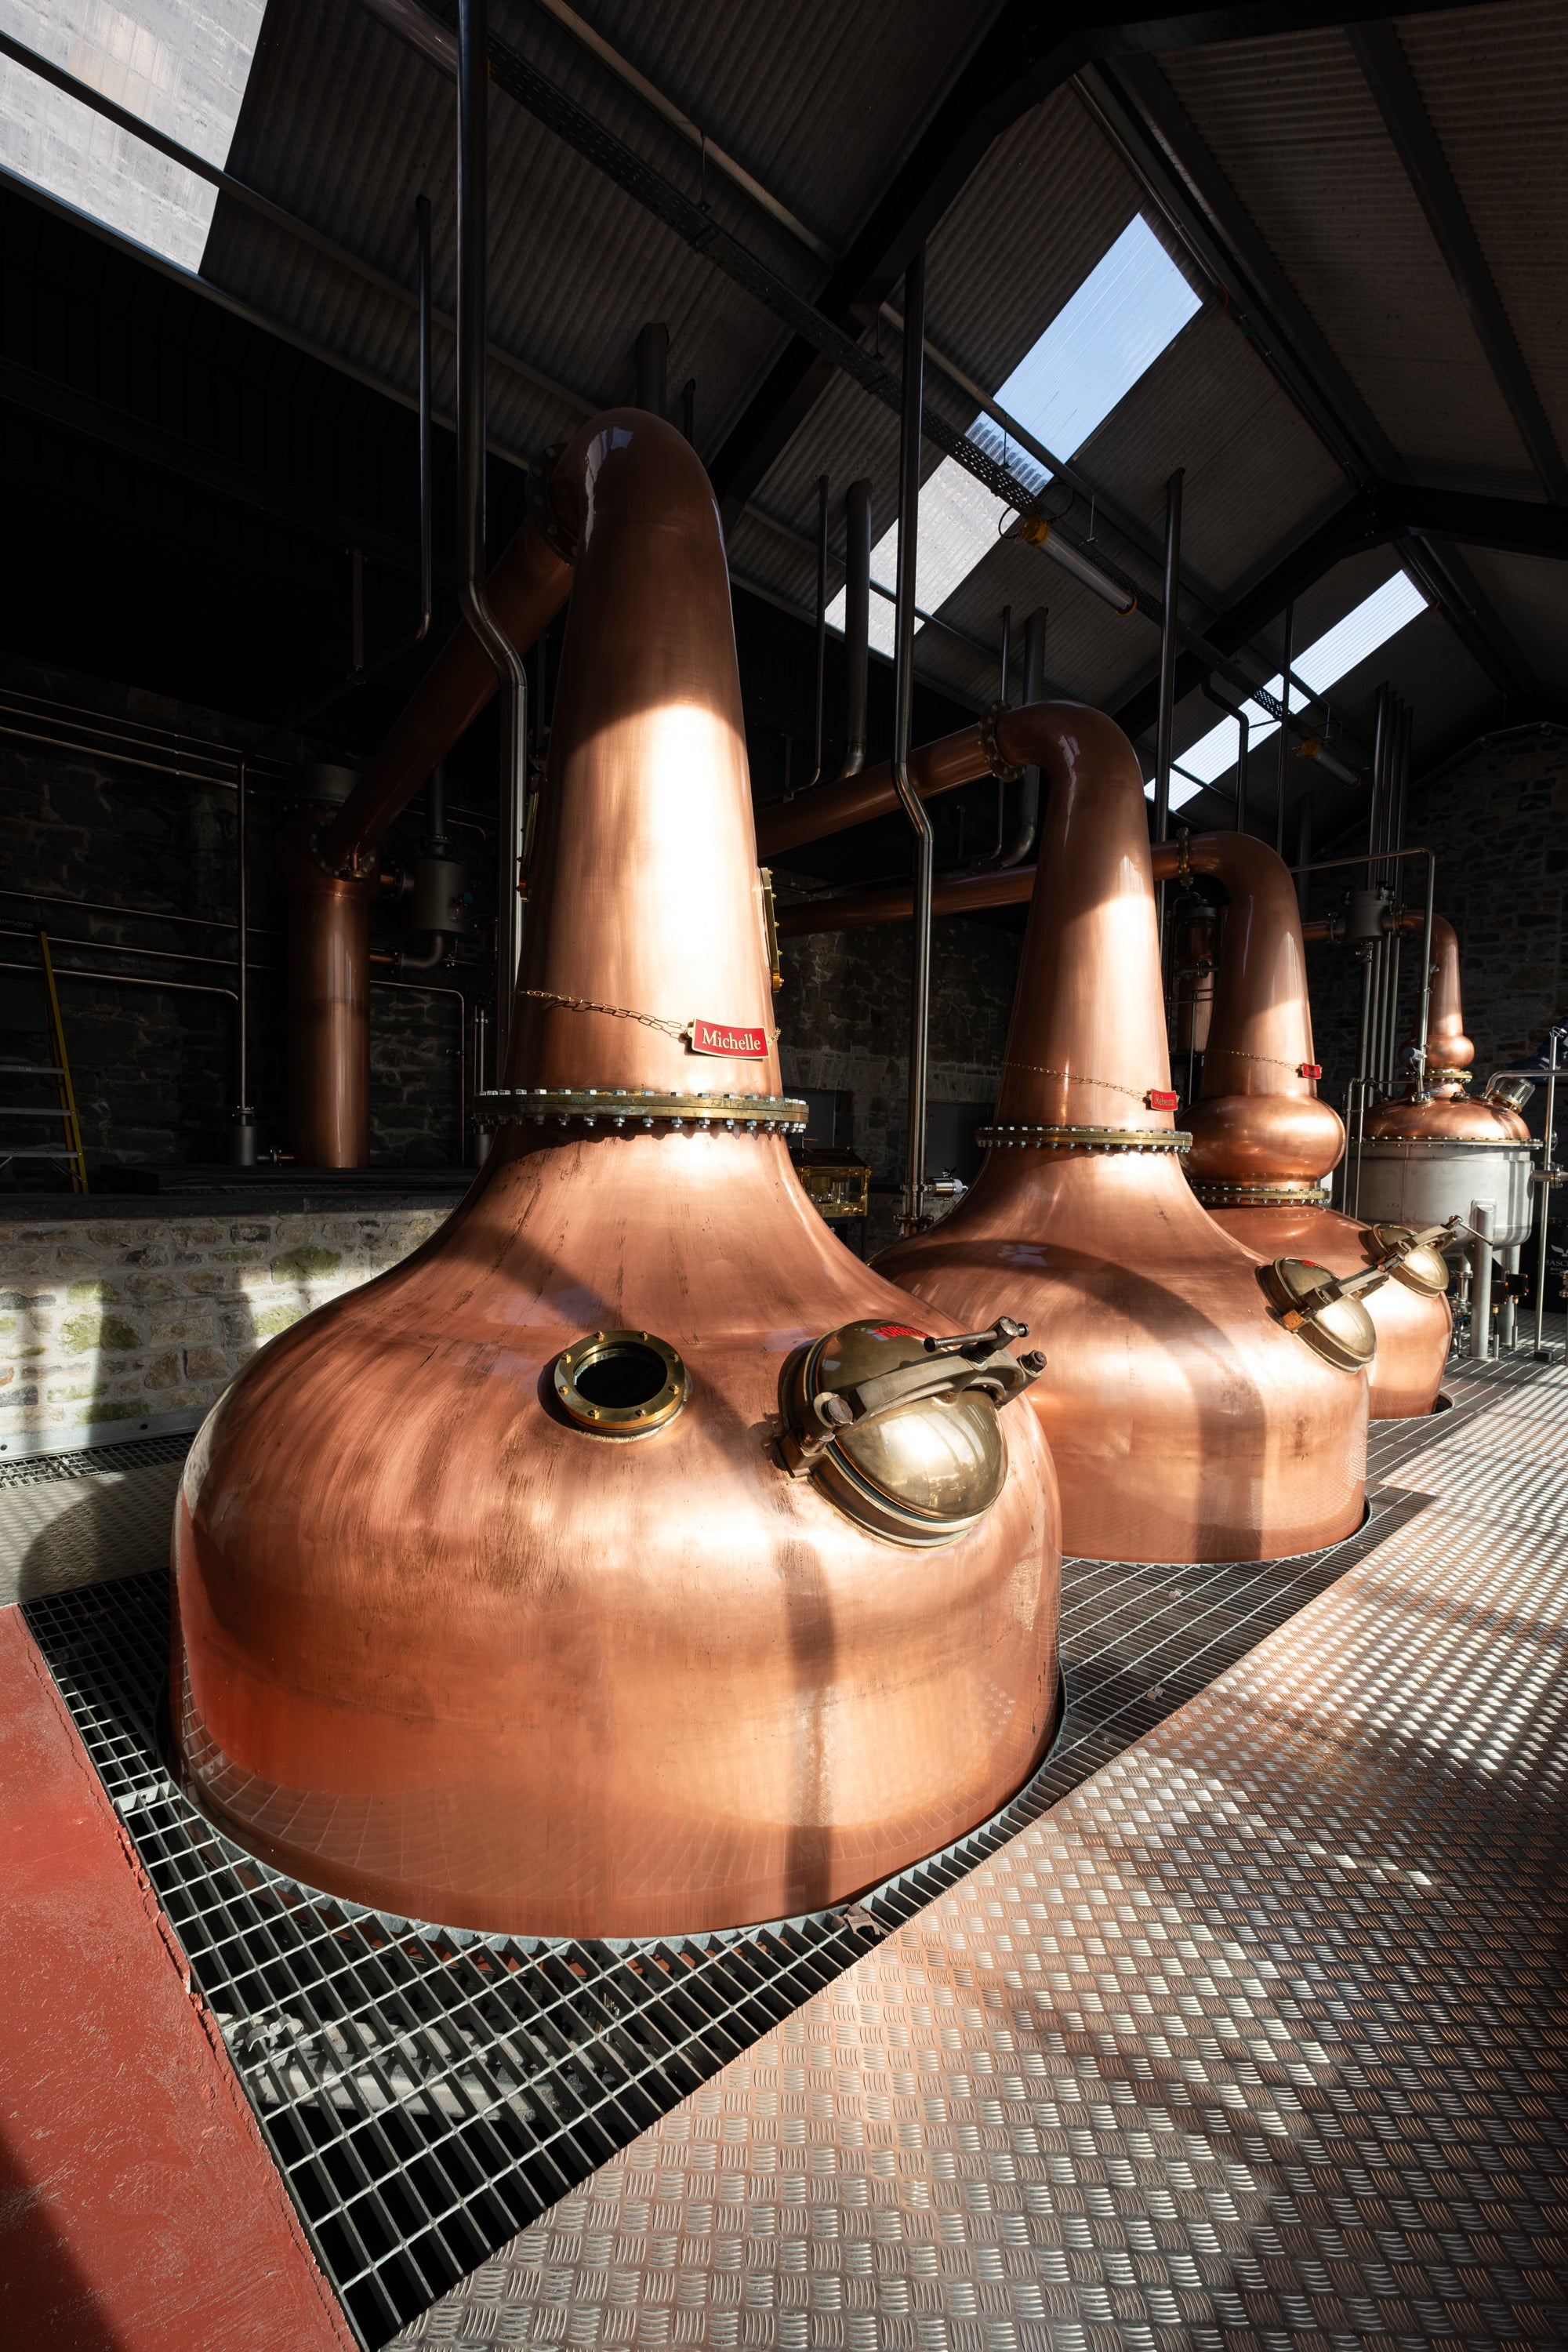 Ahascragh Distillery